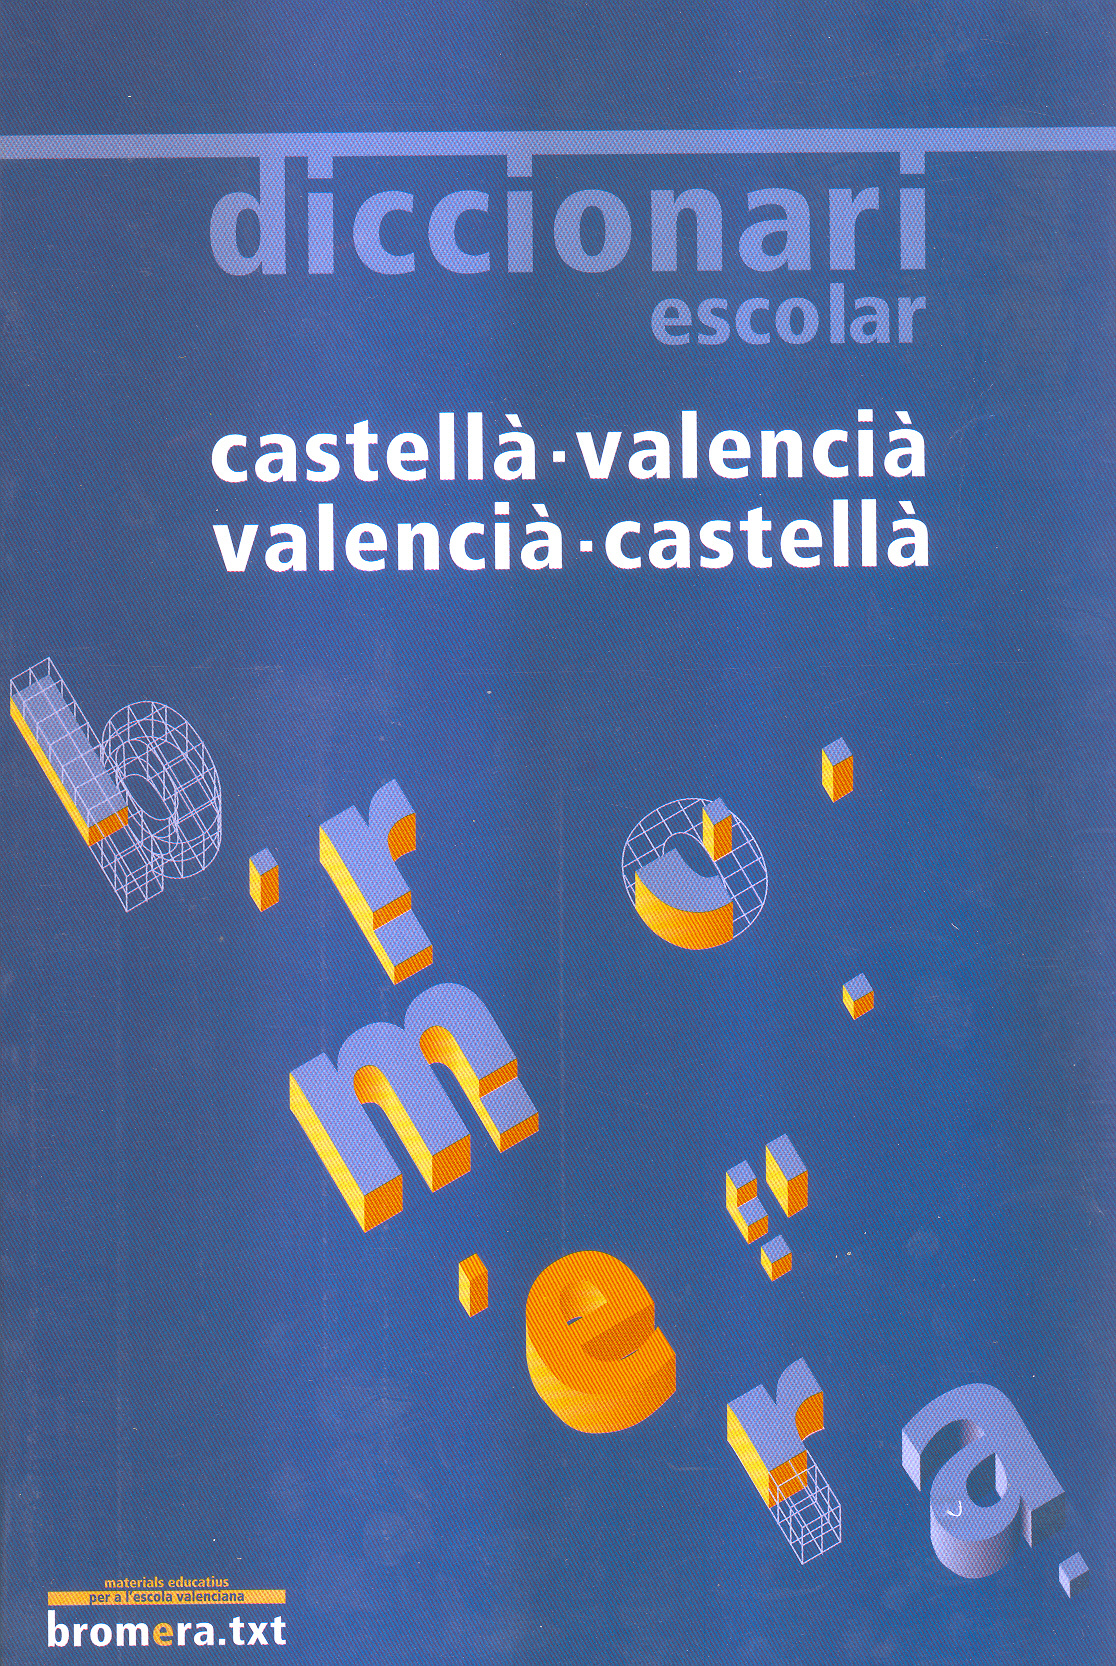 Diccionari escolar castellà-valencià, valencià-castellà